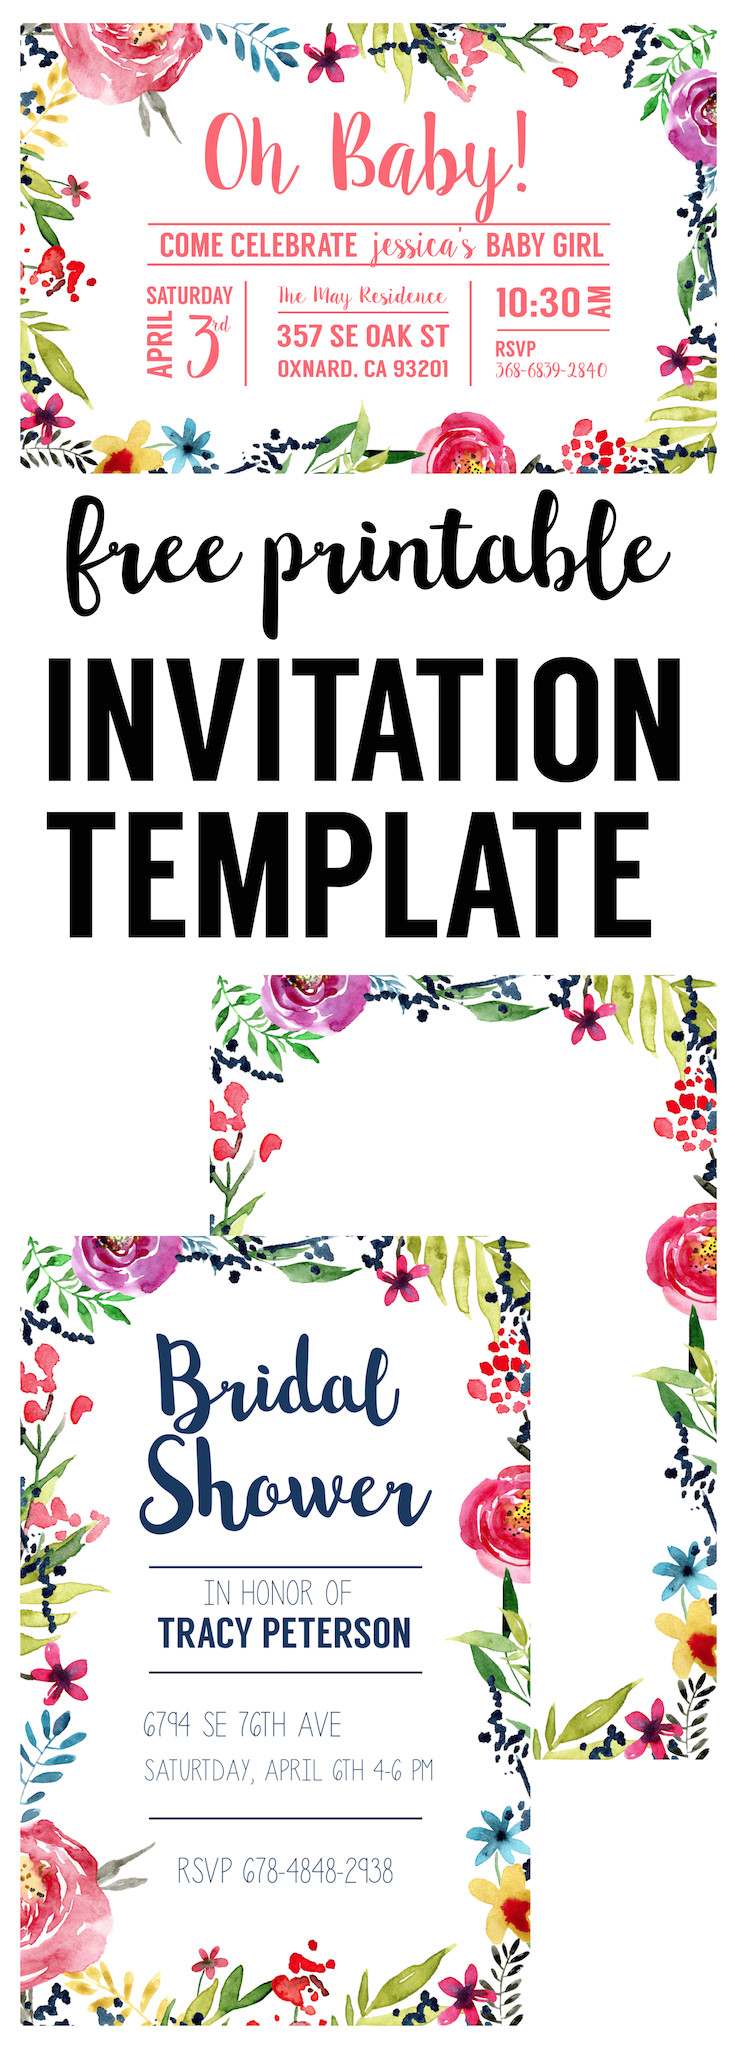 floral borders invitations free printable templates